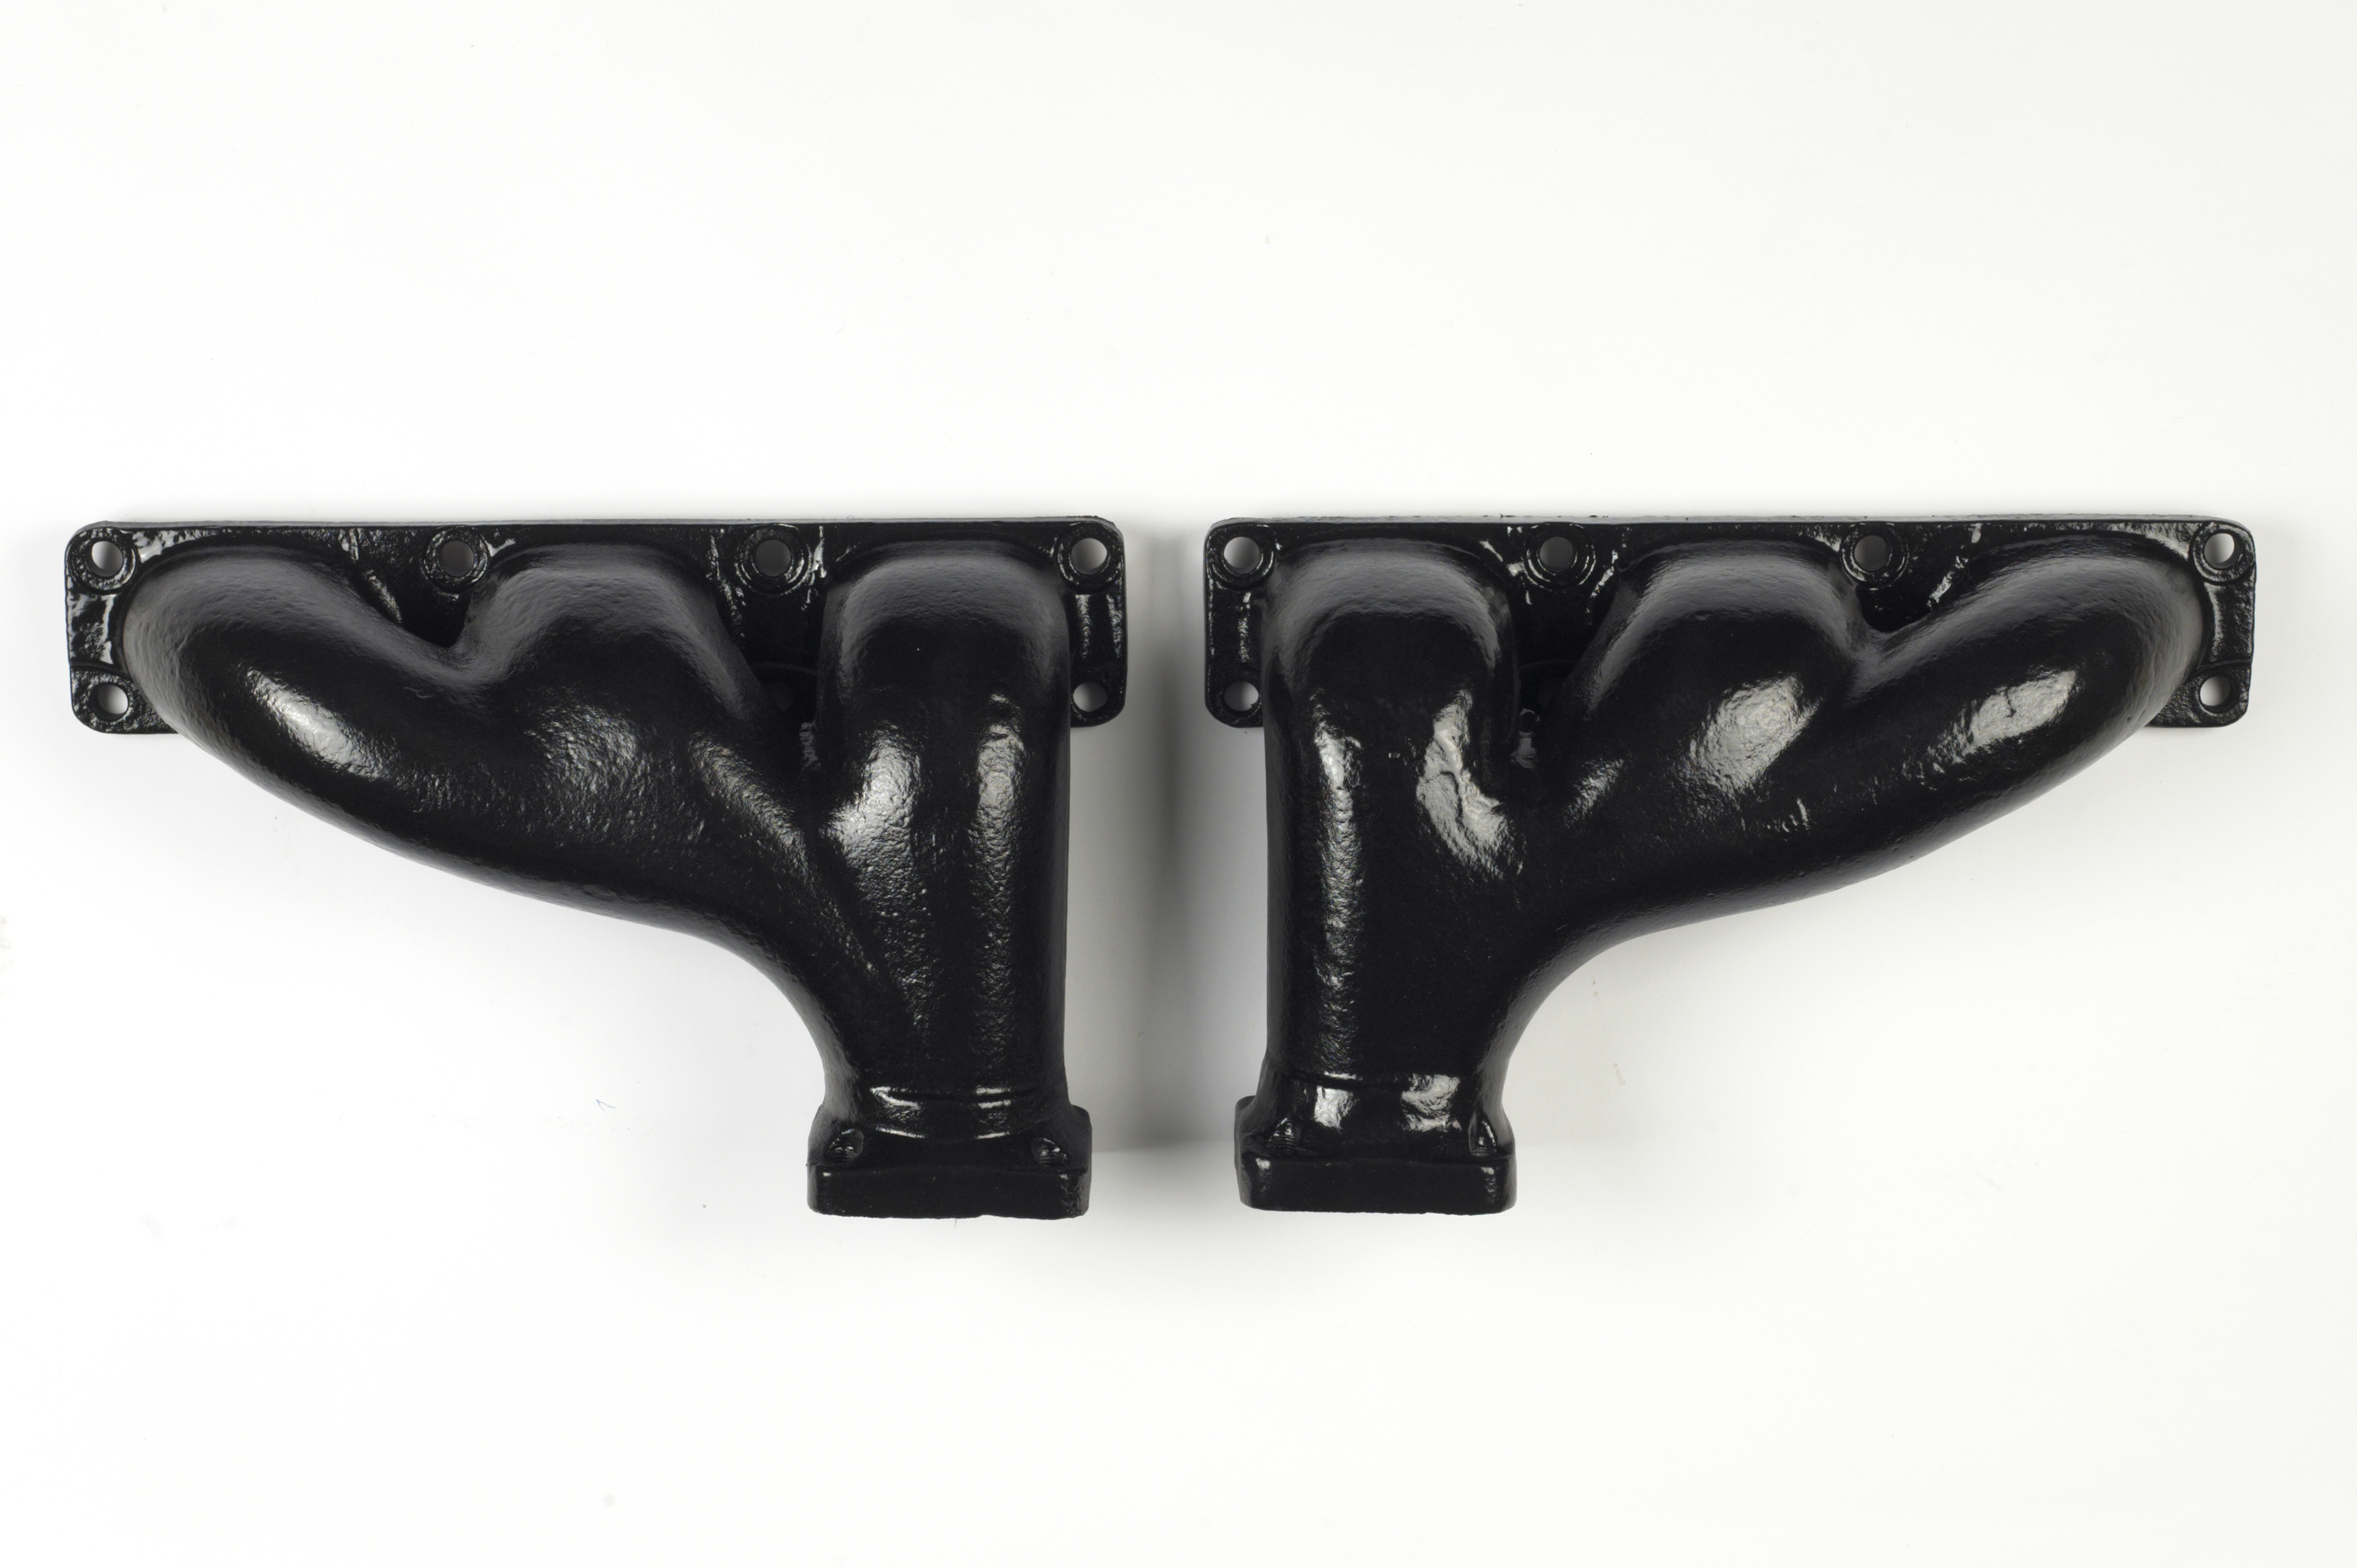 First glossy black ’enamel-like’ ceramic coating provides period finish